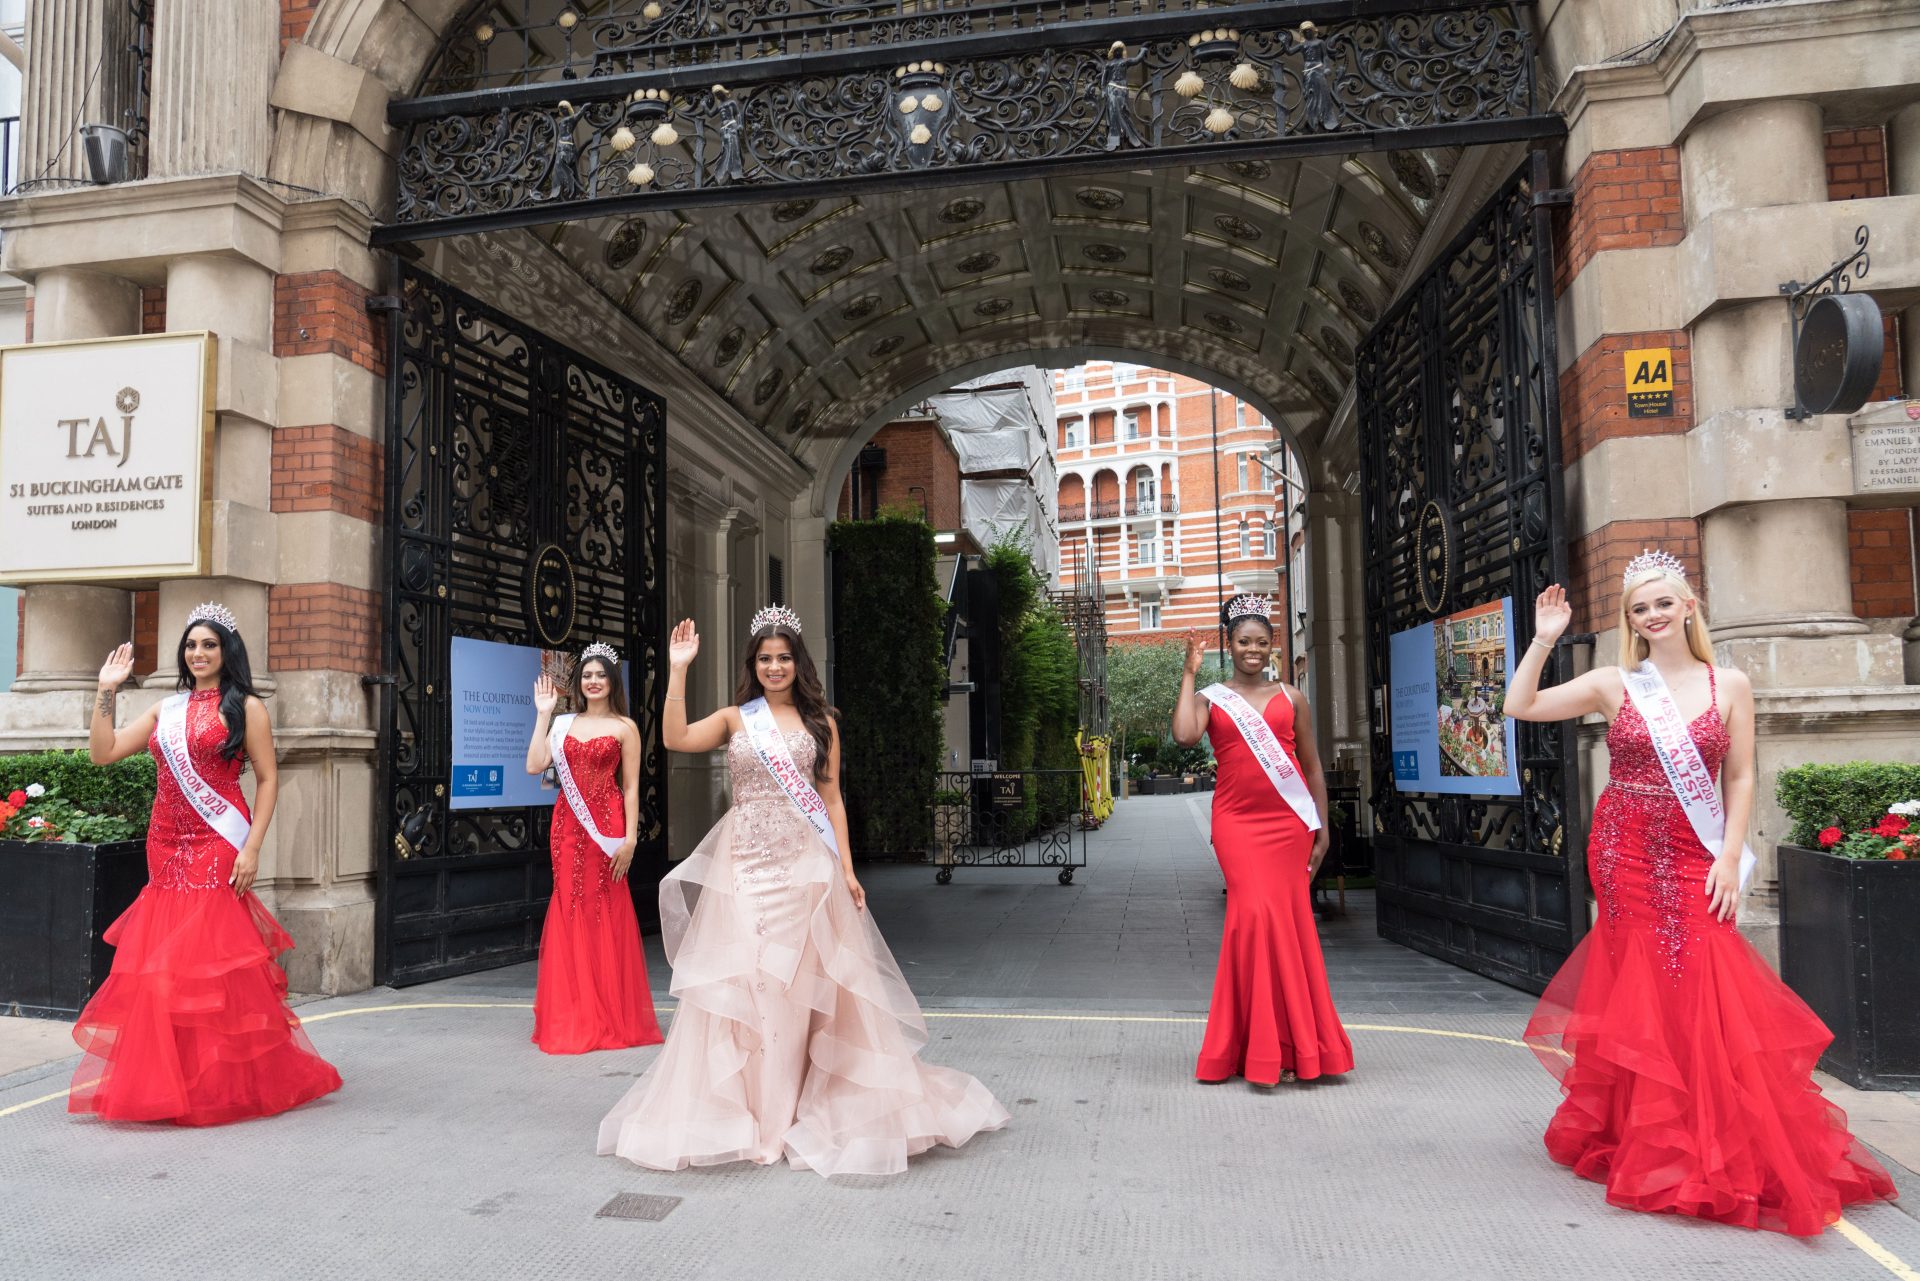 Taj 51 Buckingham Gate Suites & Residences to host                  The Miss England  22 Semi Final